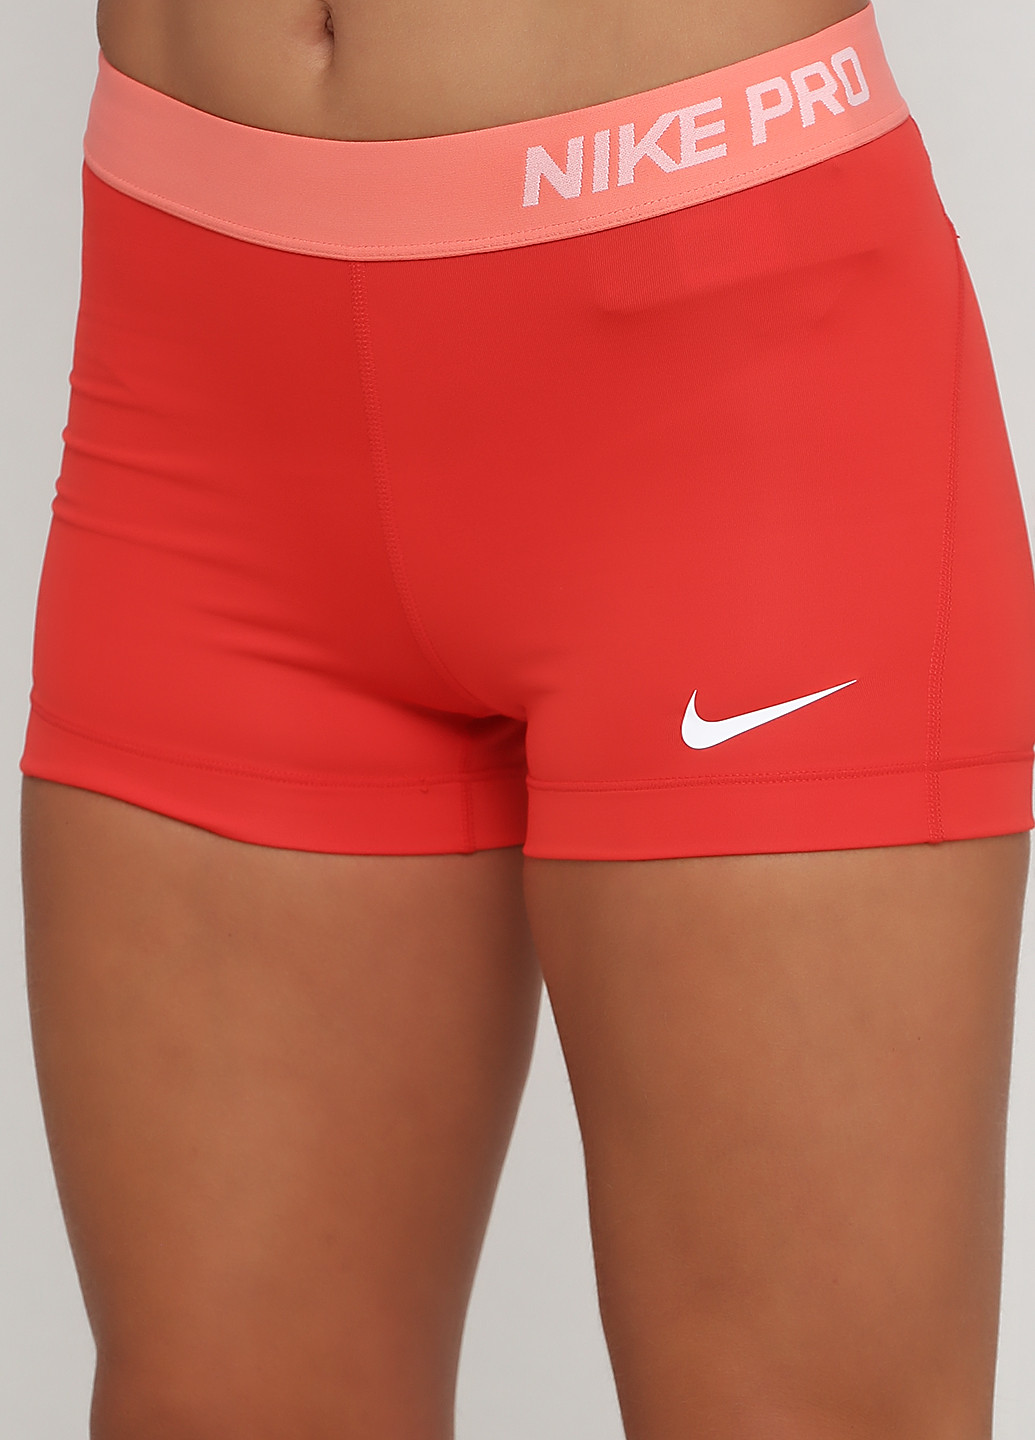 Шорты Nike pro 3 short (187143602)